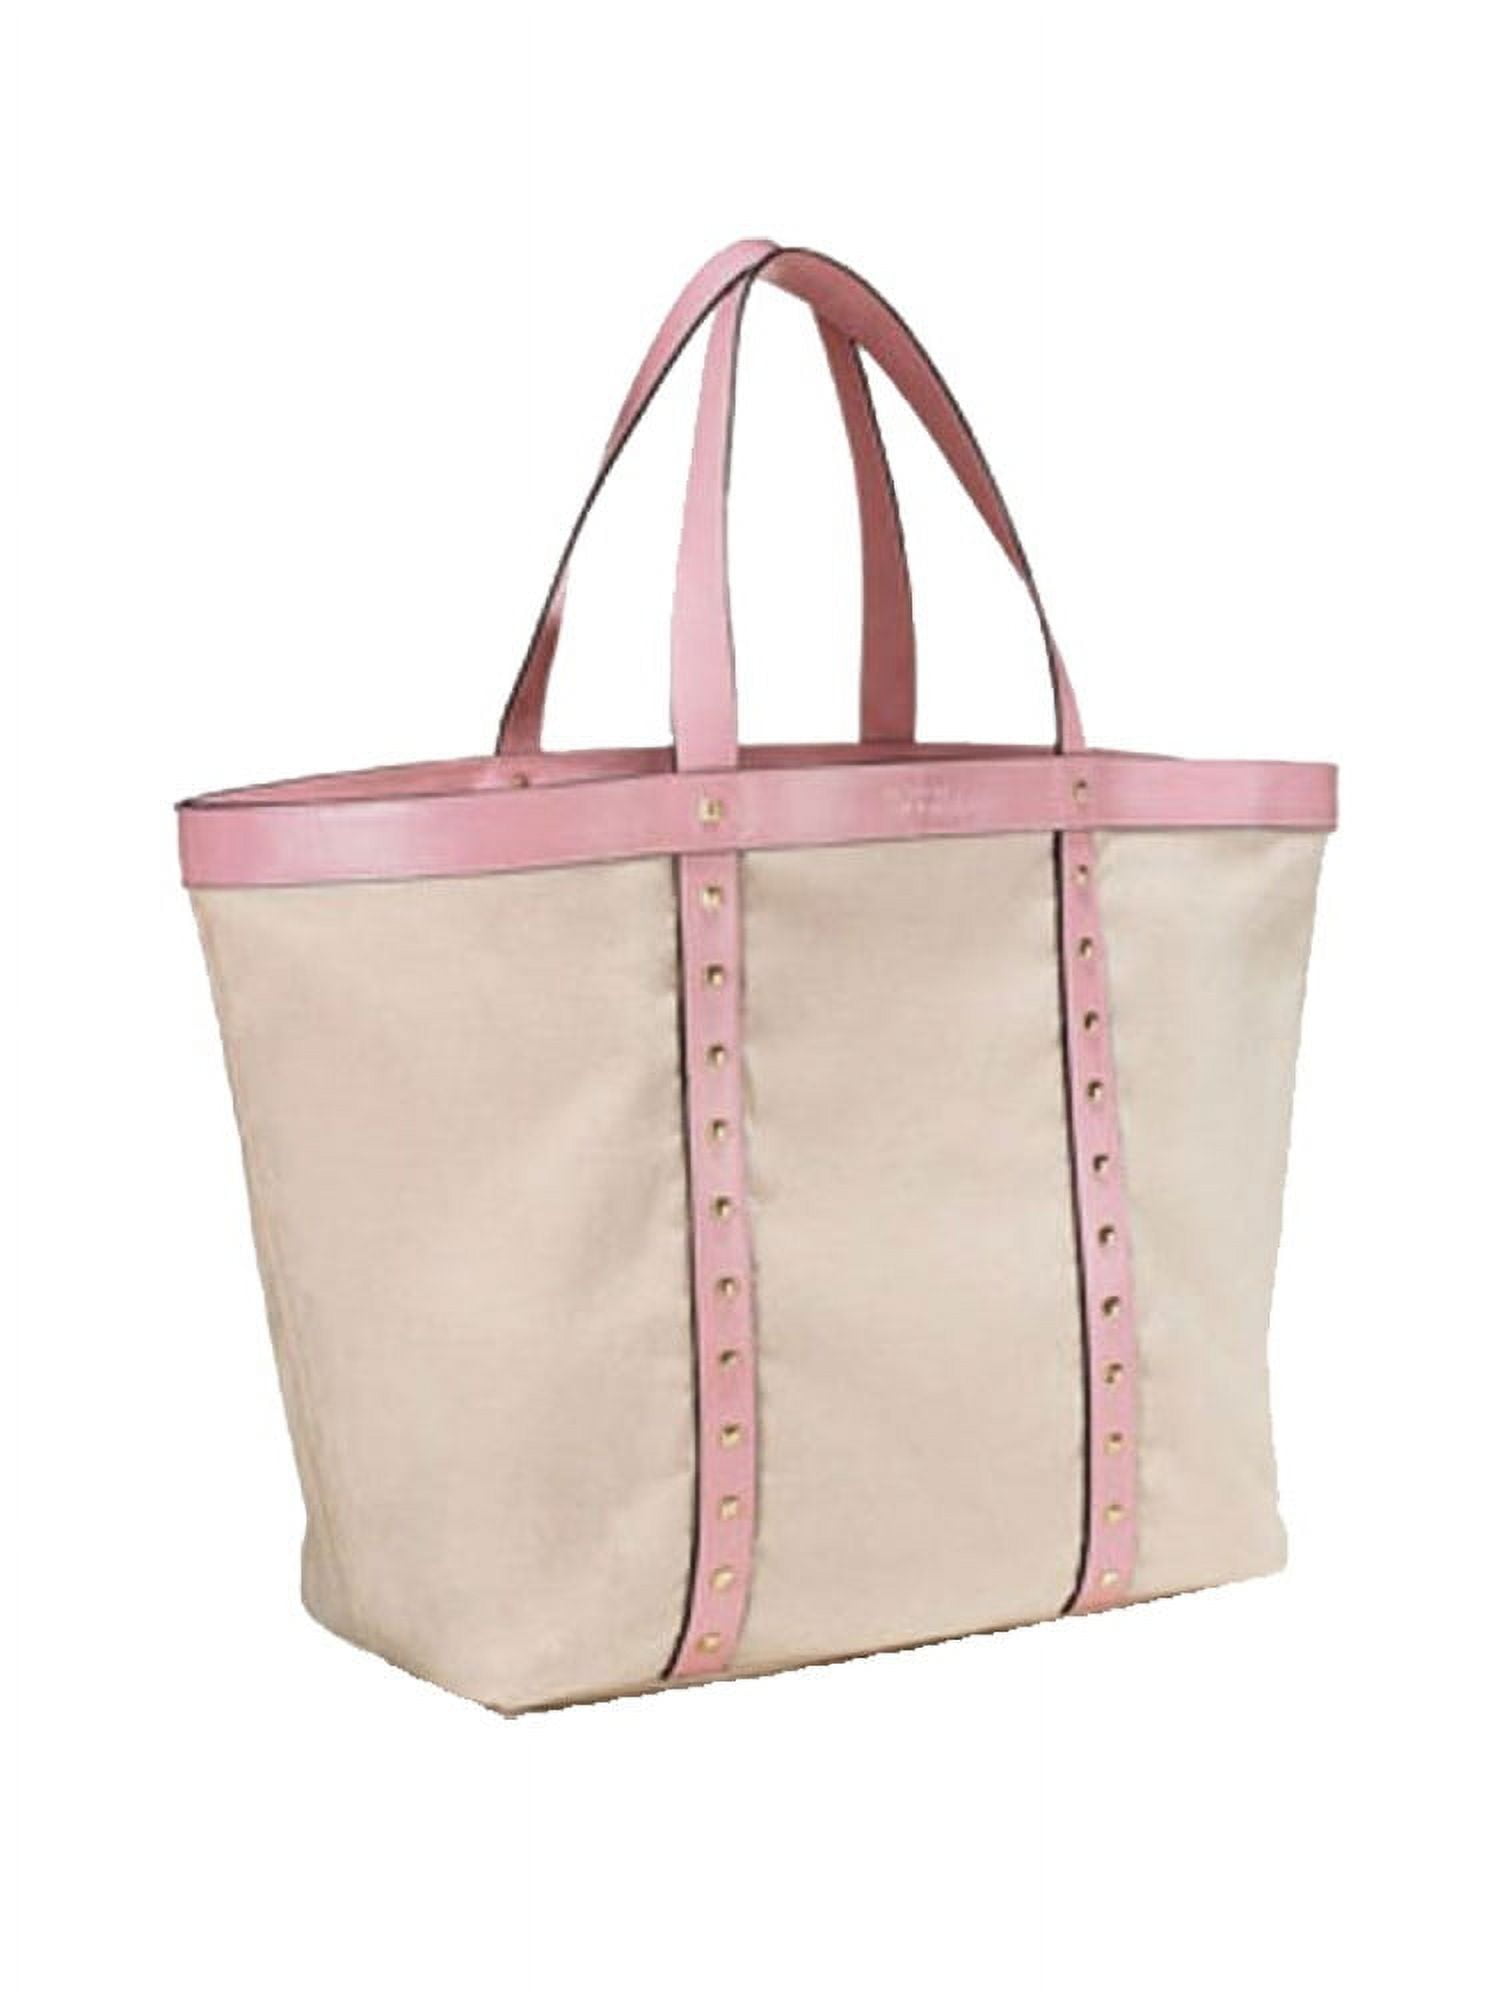 Victoria's Secret Large Canvas Tote Shoulder Bag Pink Studded Faux Leather